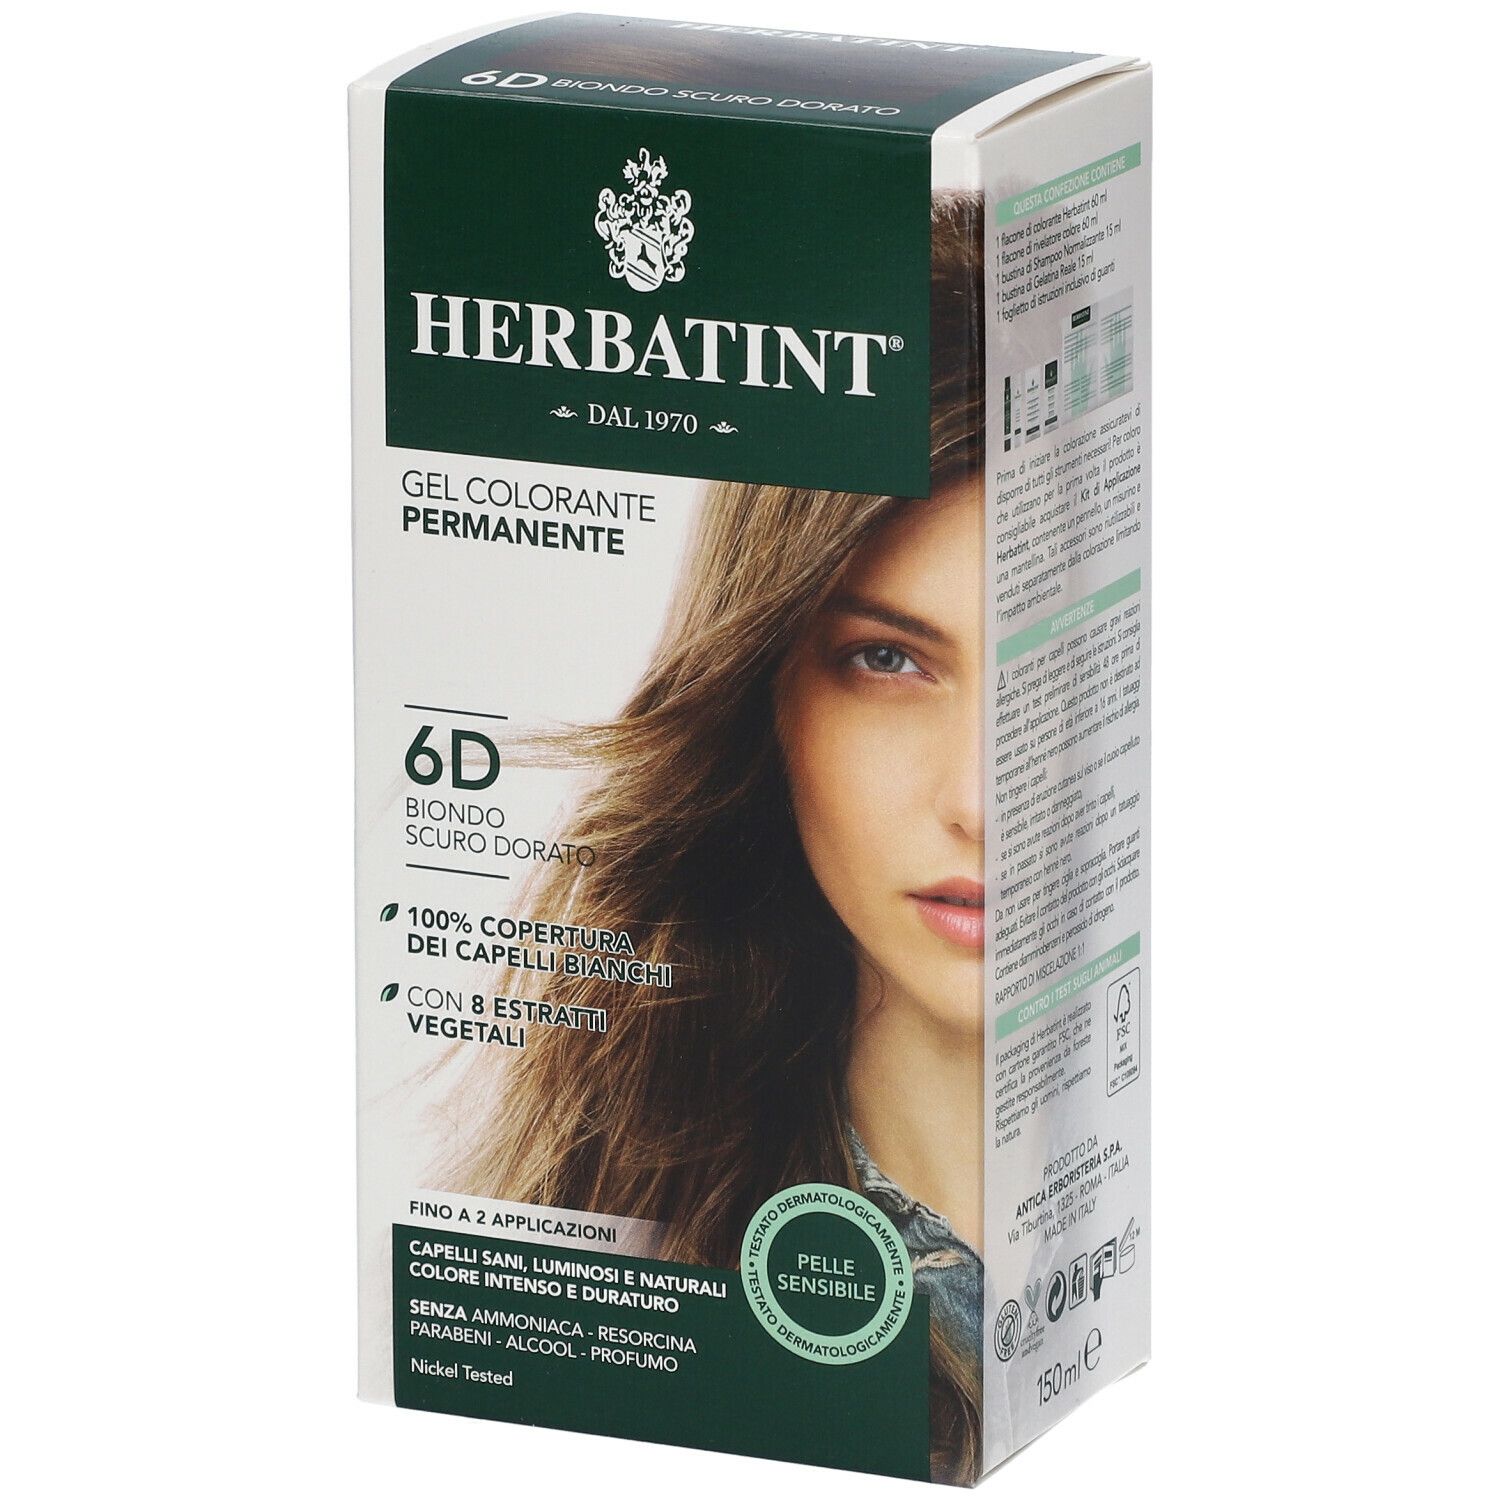 HERBATINT® Haarfarbe Dunkelblond 6D